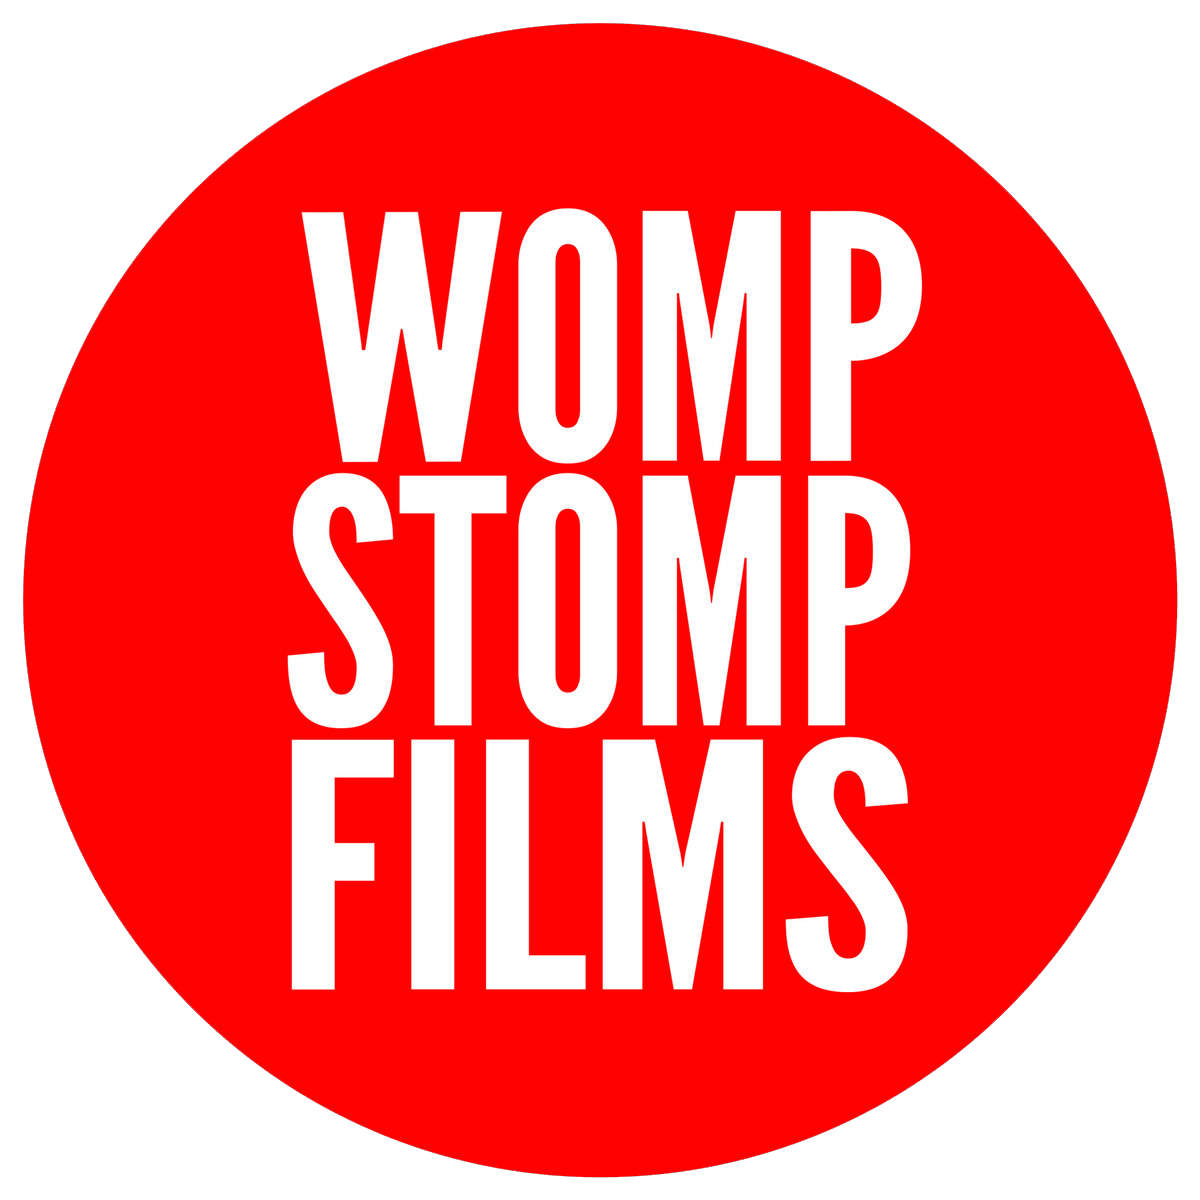 womp stomp films